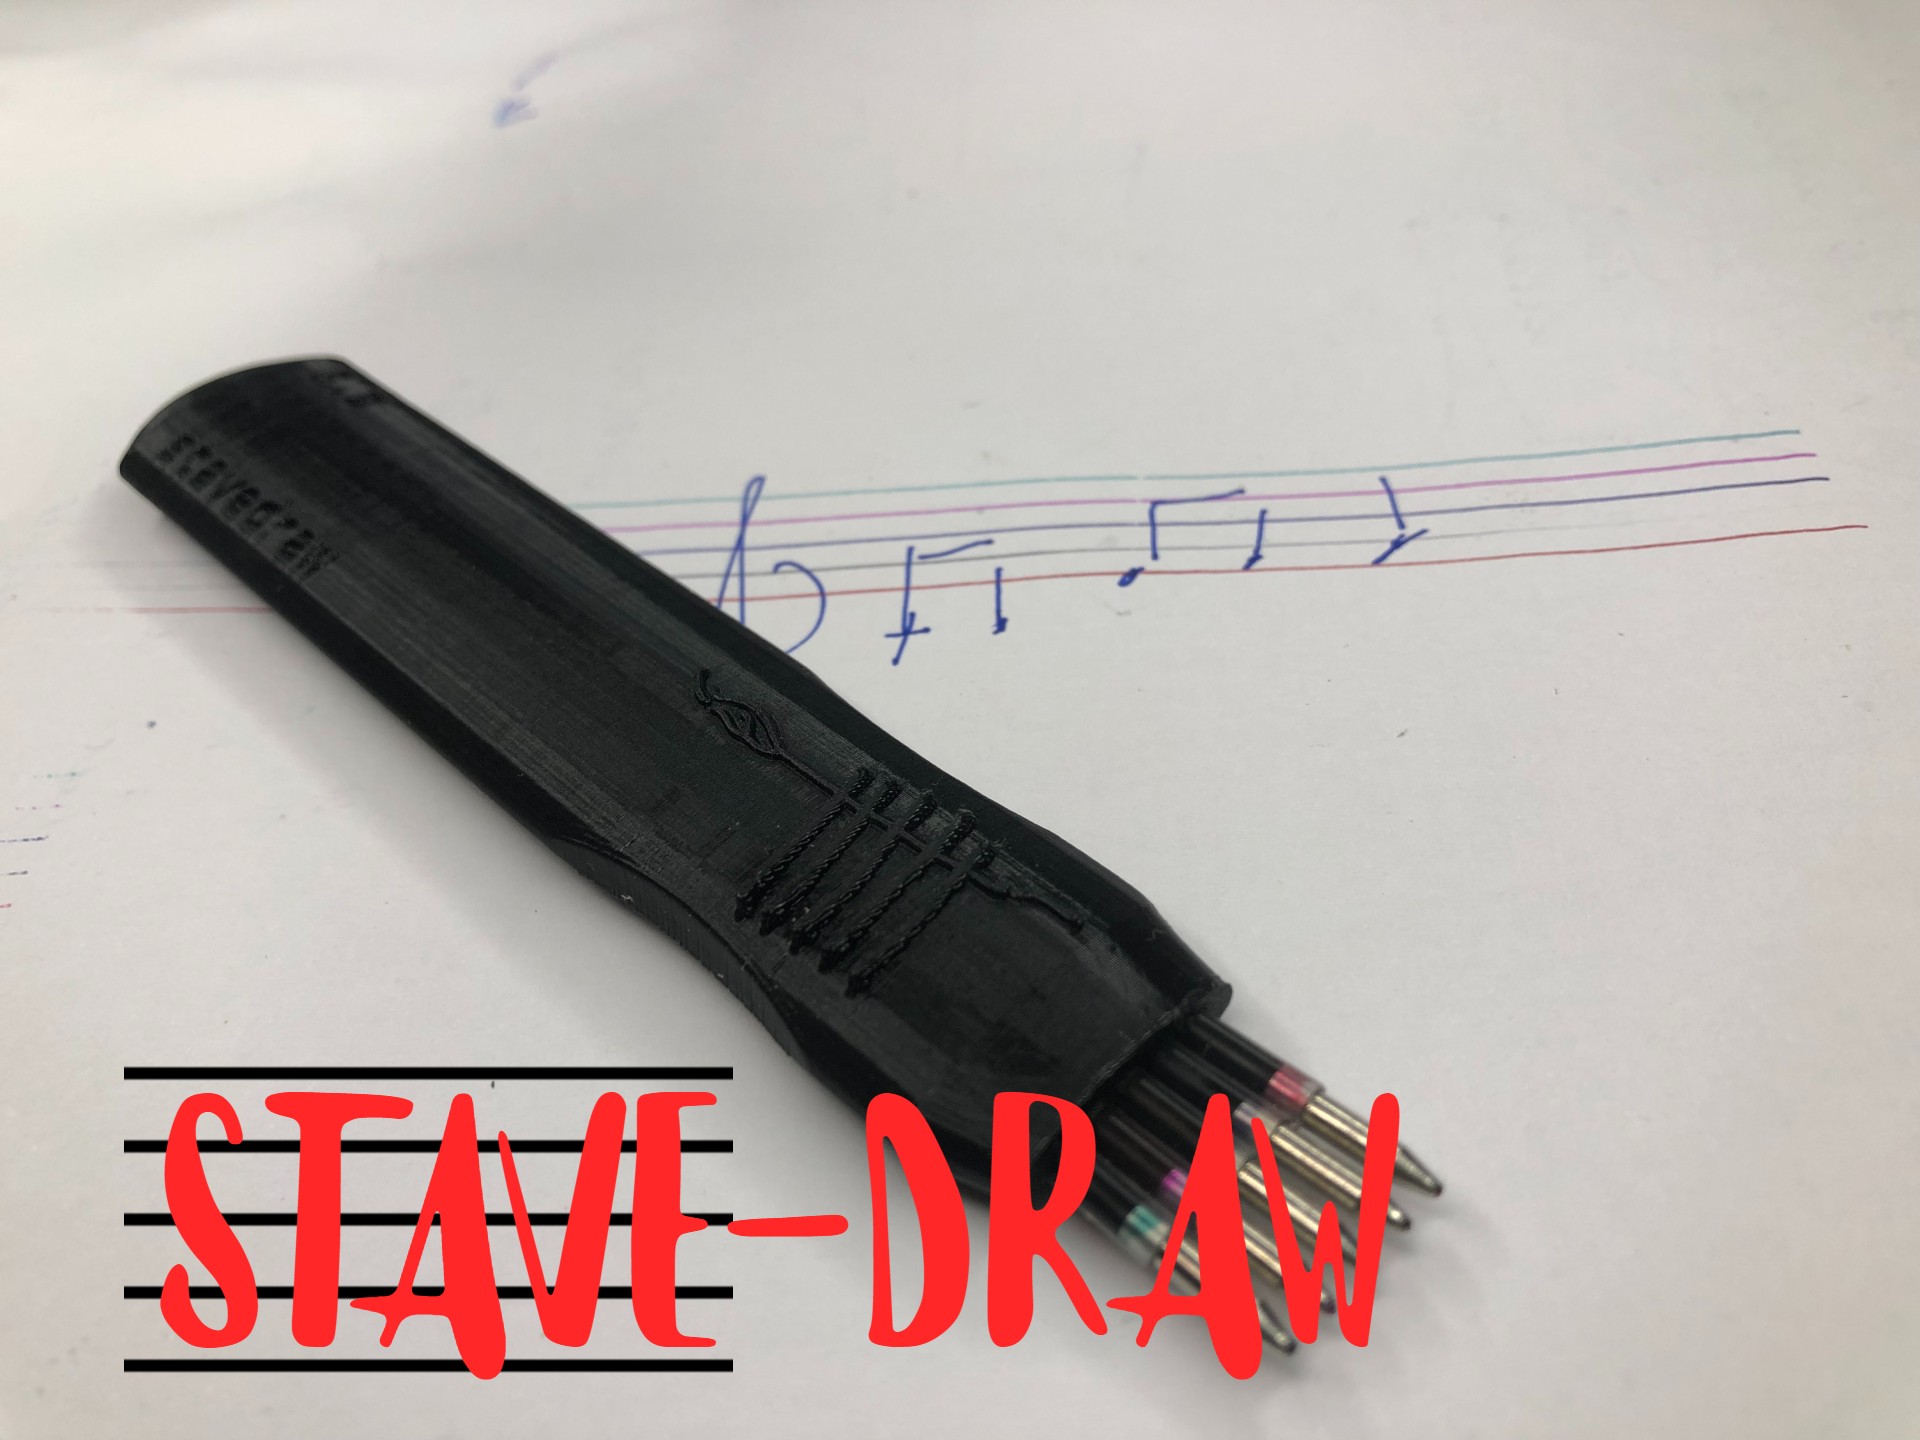 Staff-stave pen (music)